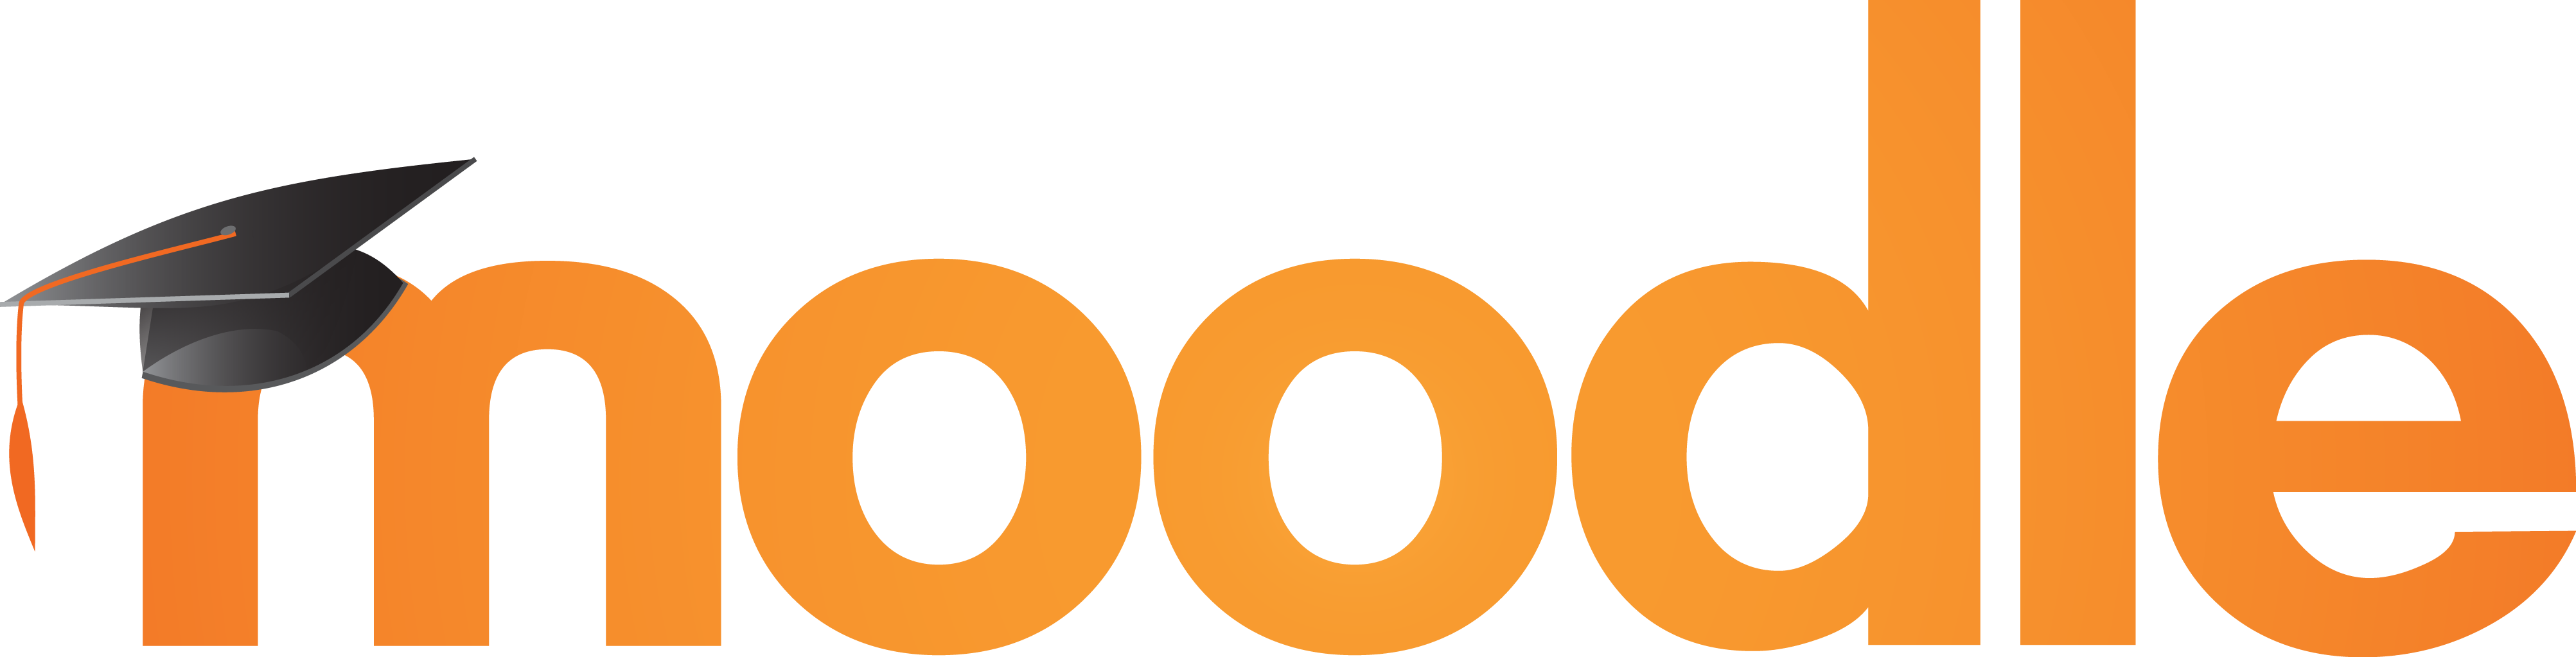 logo_moodle